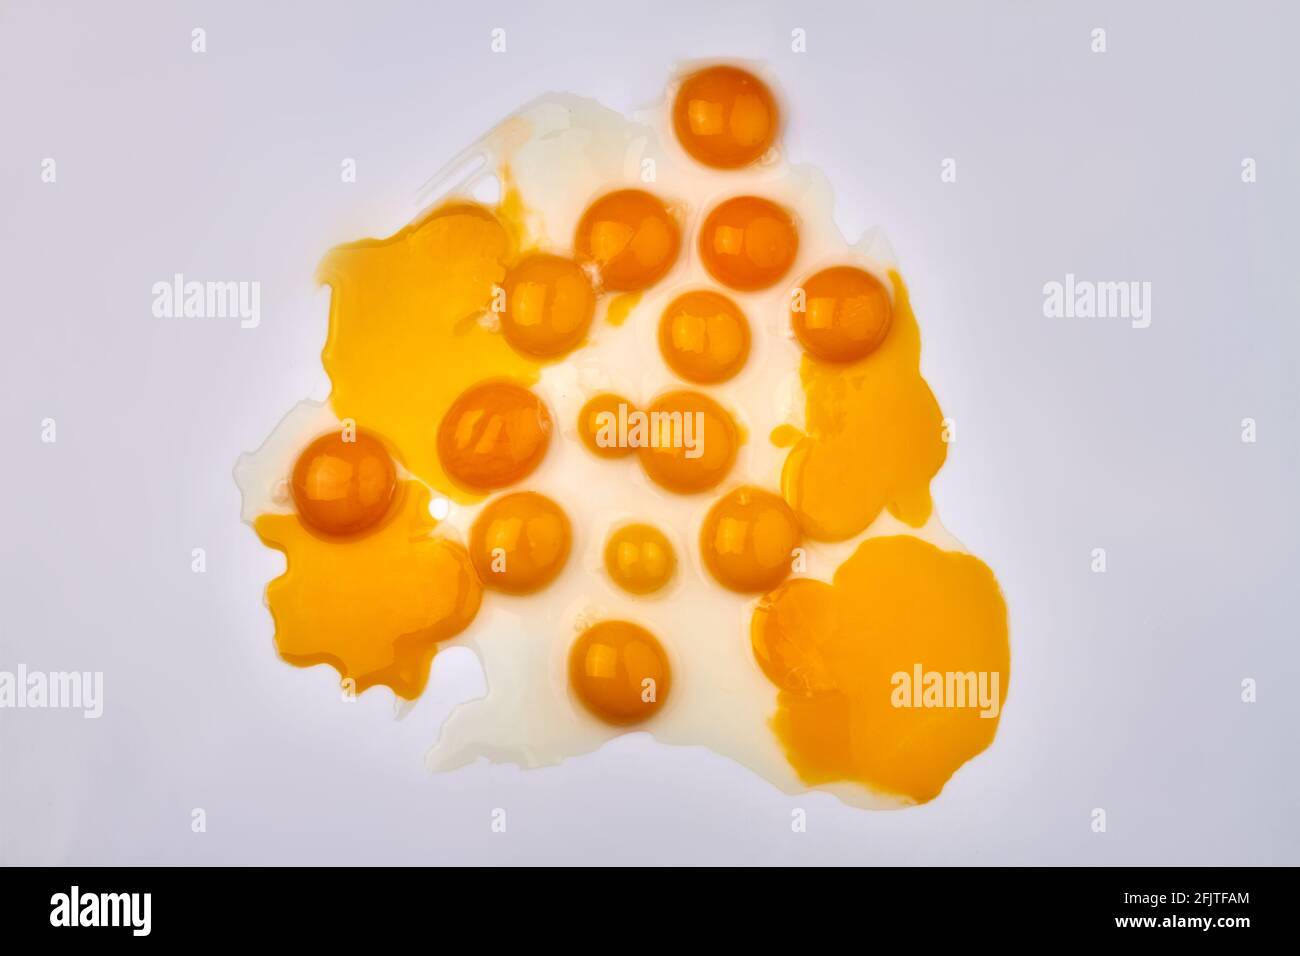 Art composition of egg yolks. Stock Photo